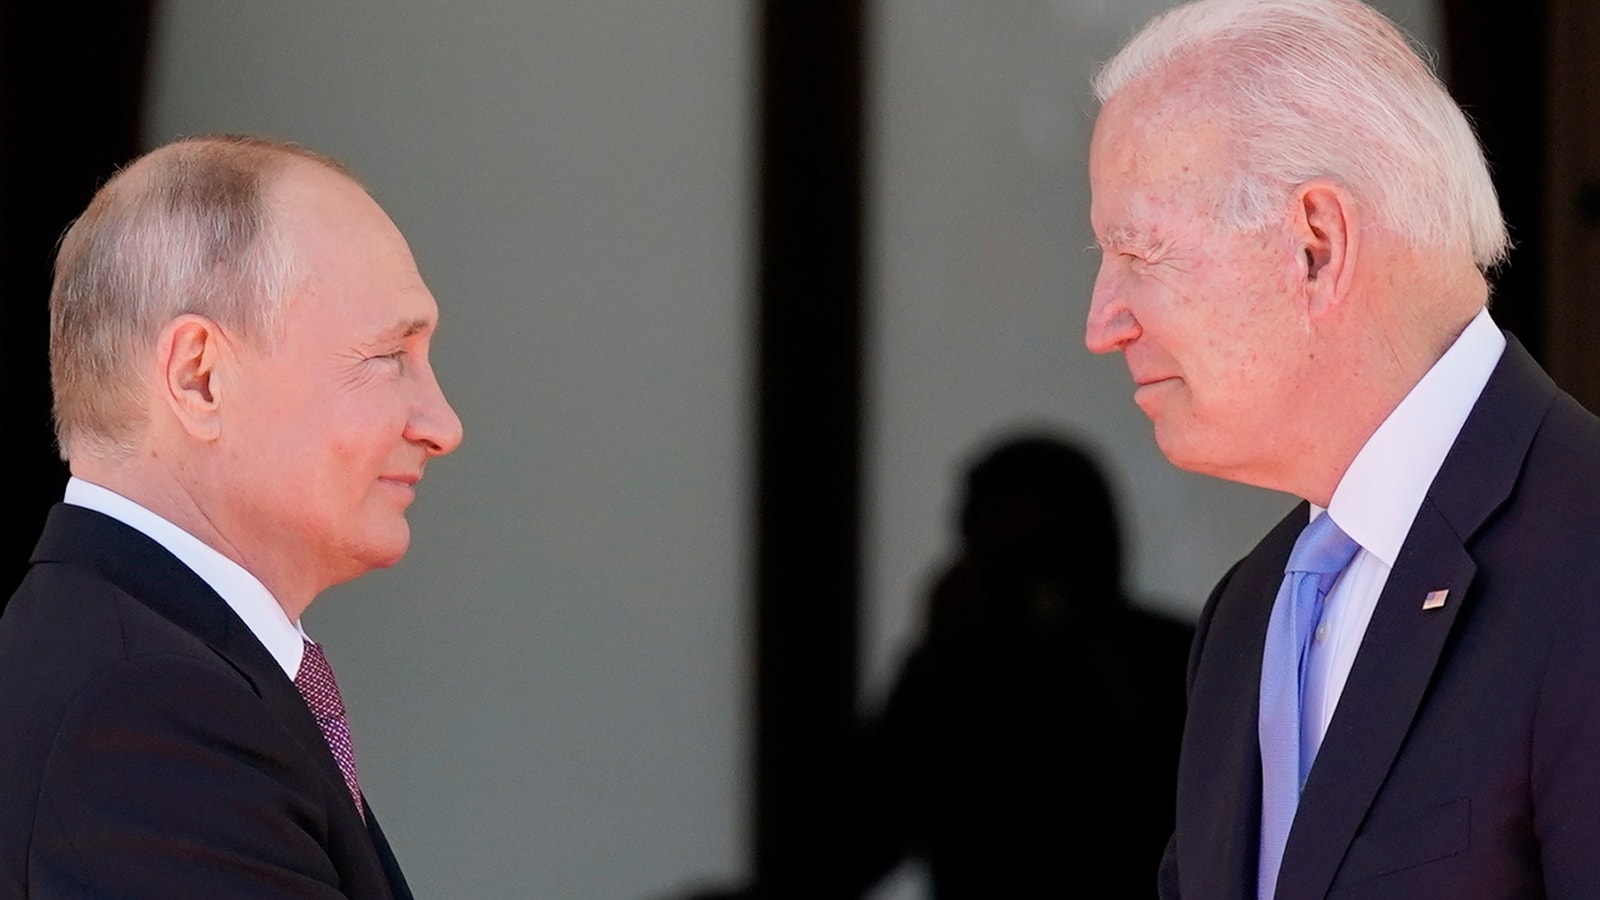 Biden told Putin several times nuclear war must not be started Kremlin aide